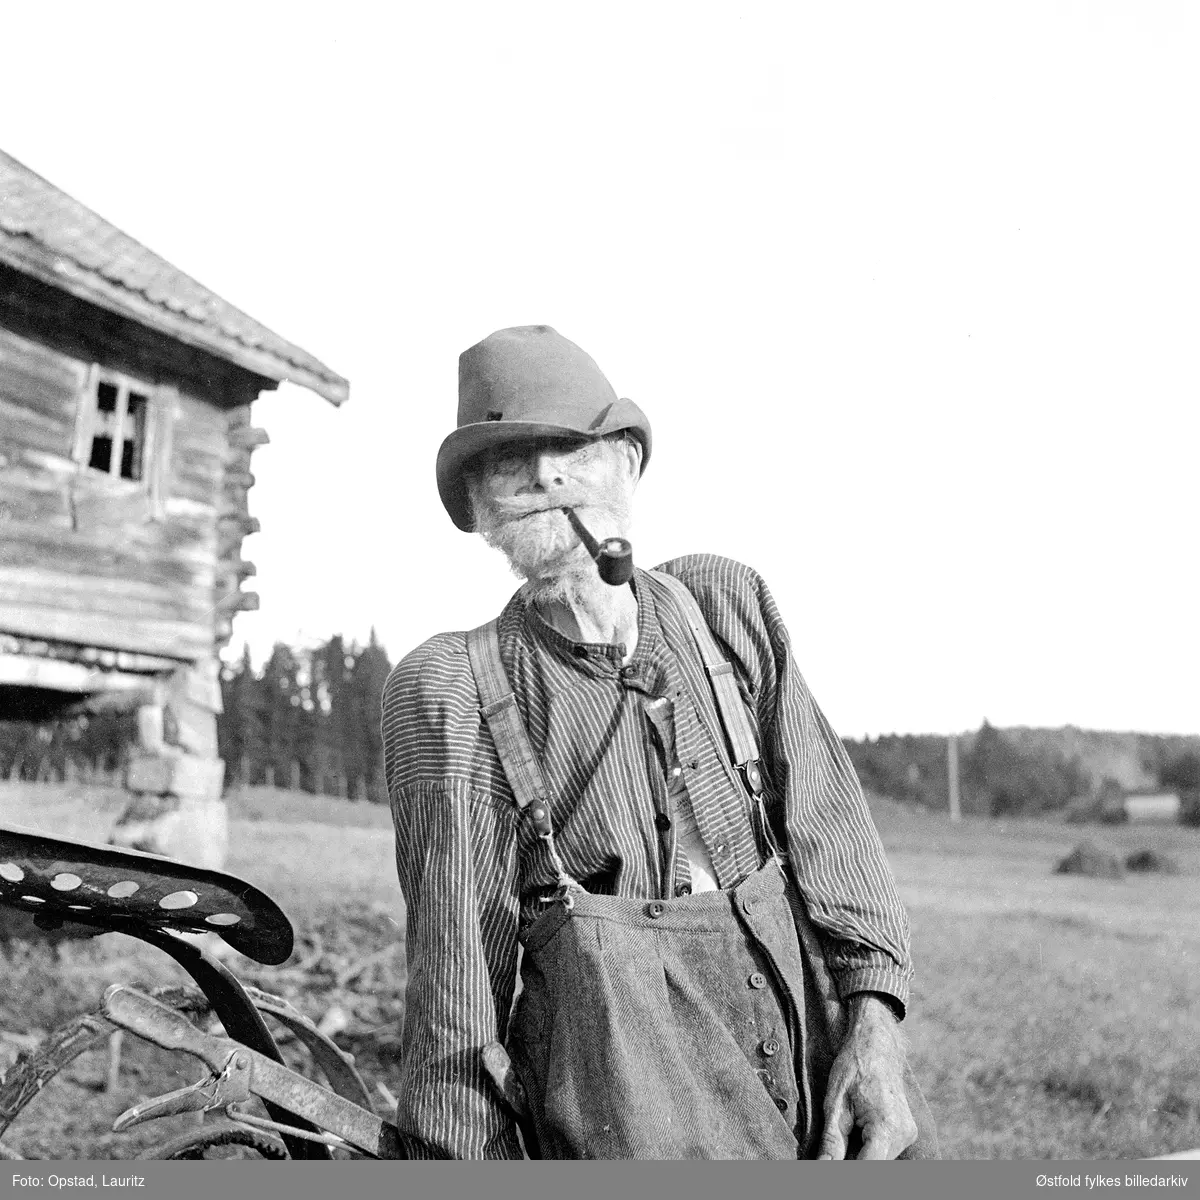 Husmann Petter Olsen Langedal (1860-1857), Halvorsrud i Marker, 1951.
På bildet er Langedal ca. 91 år.